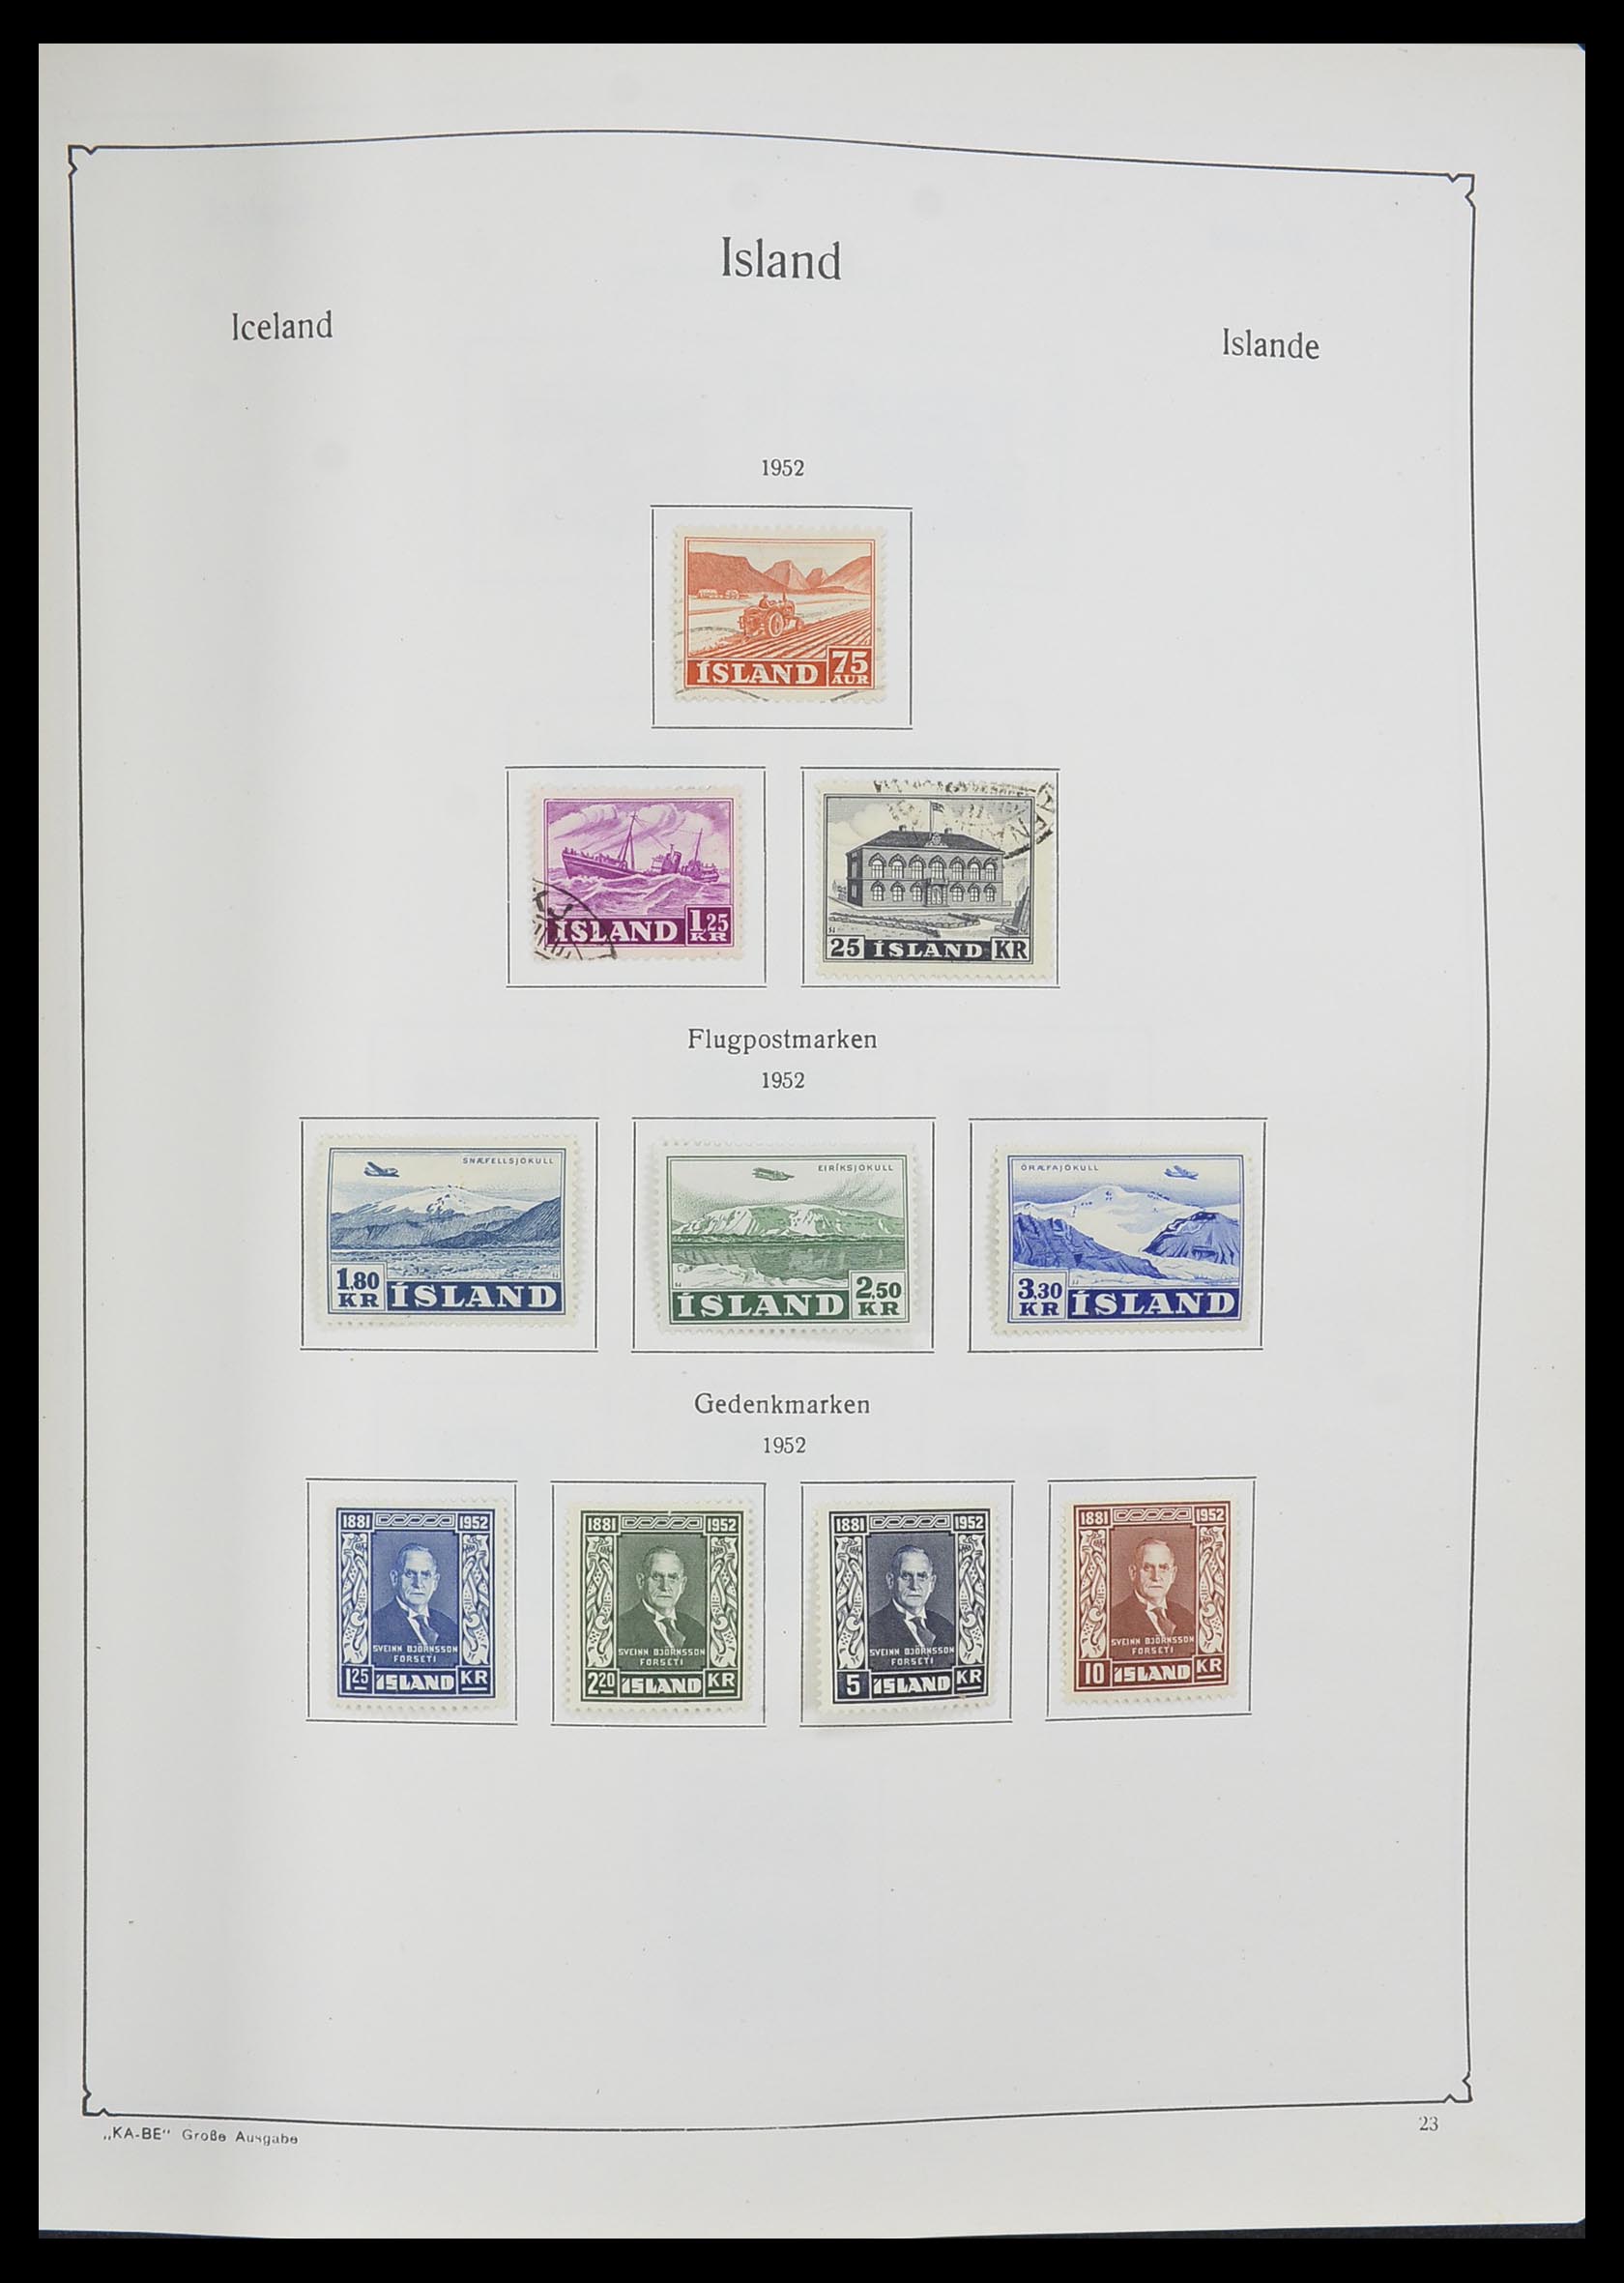 33379 079 - Stamp collection 33379 Scandinavia 1856-1972.